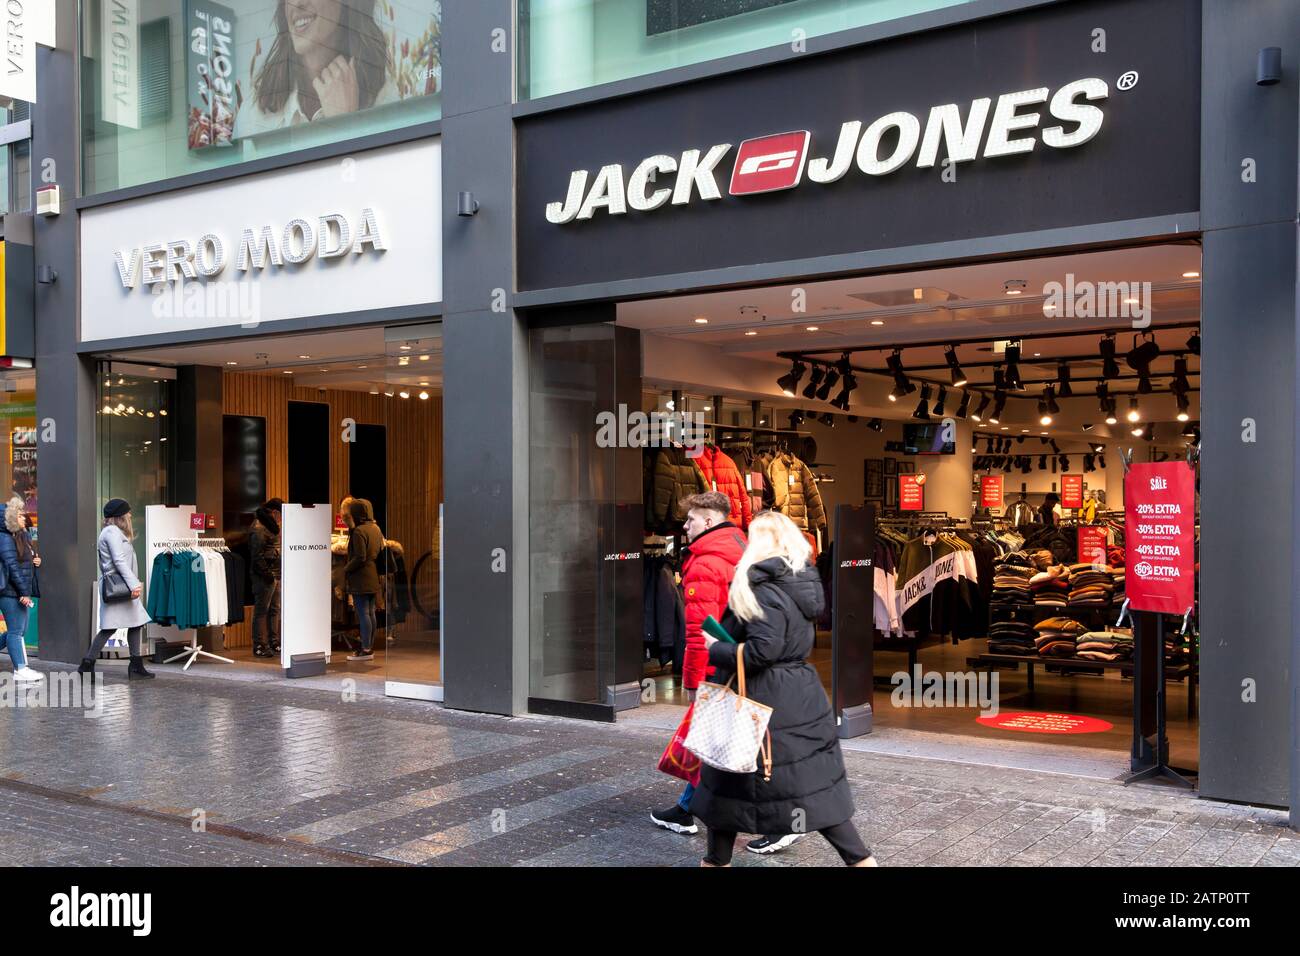 Vero moda jack jones store hi-res stock photography and images - Alamy